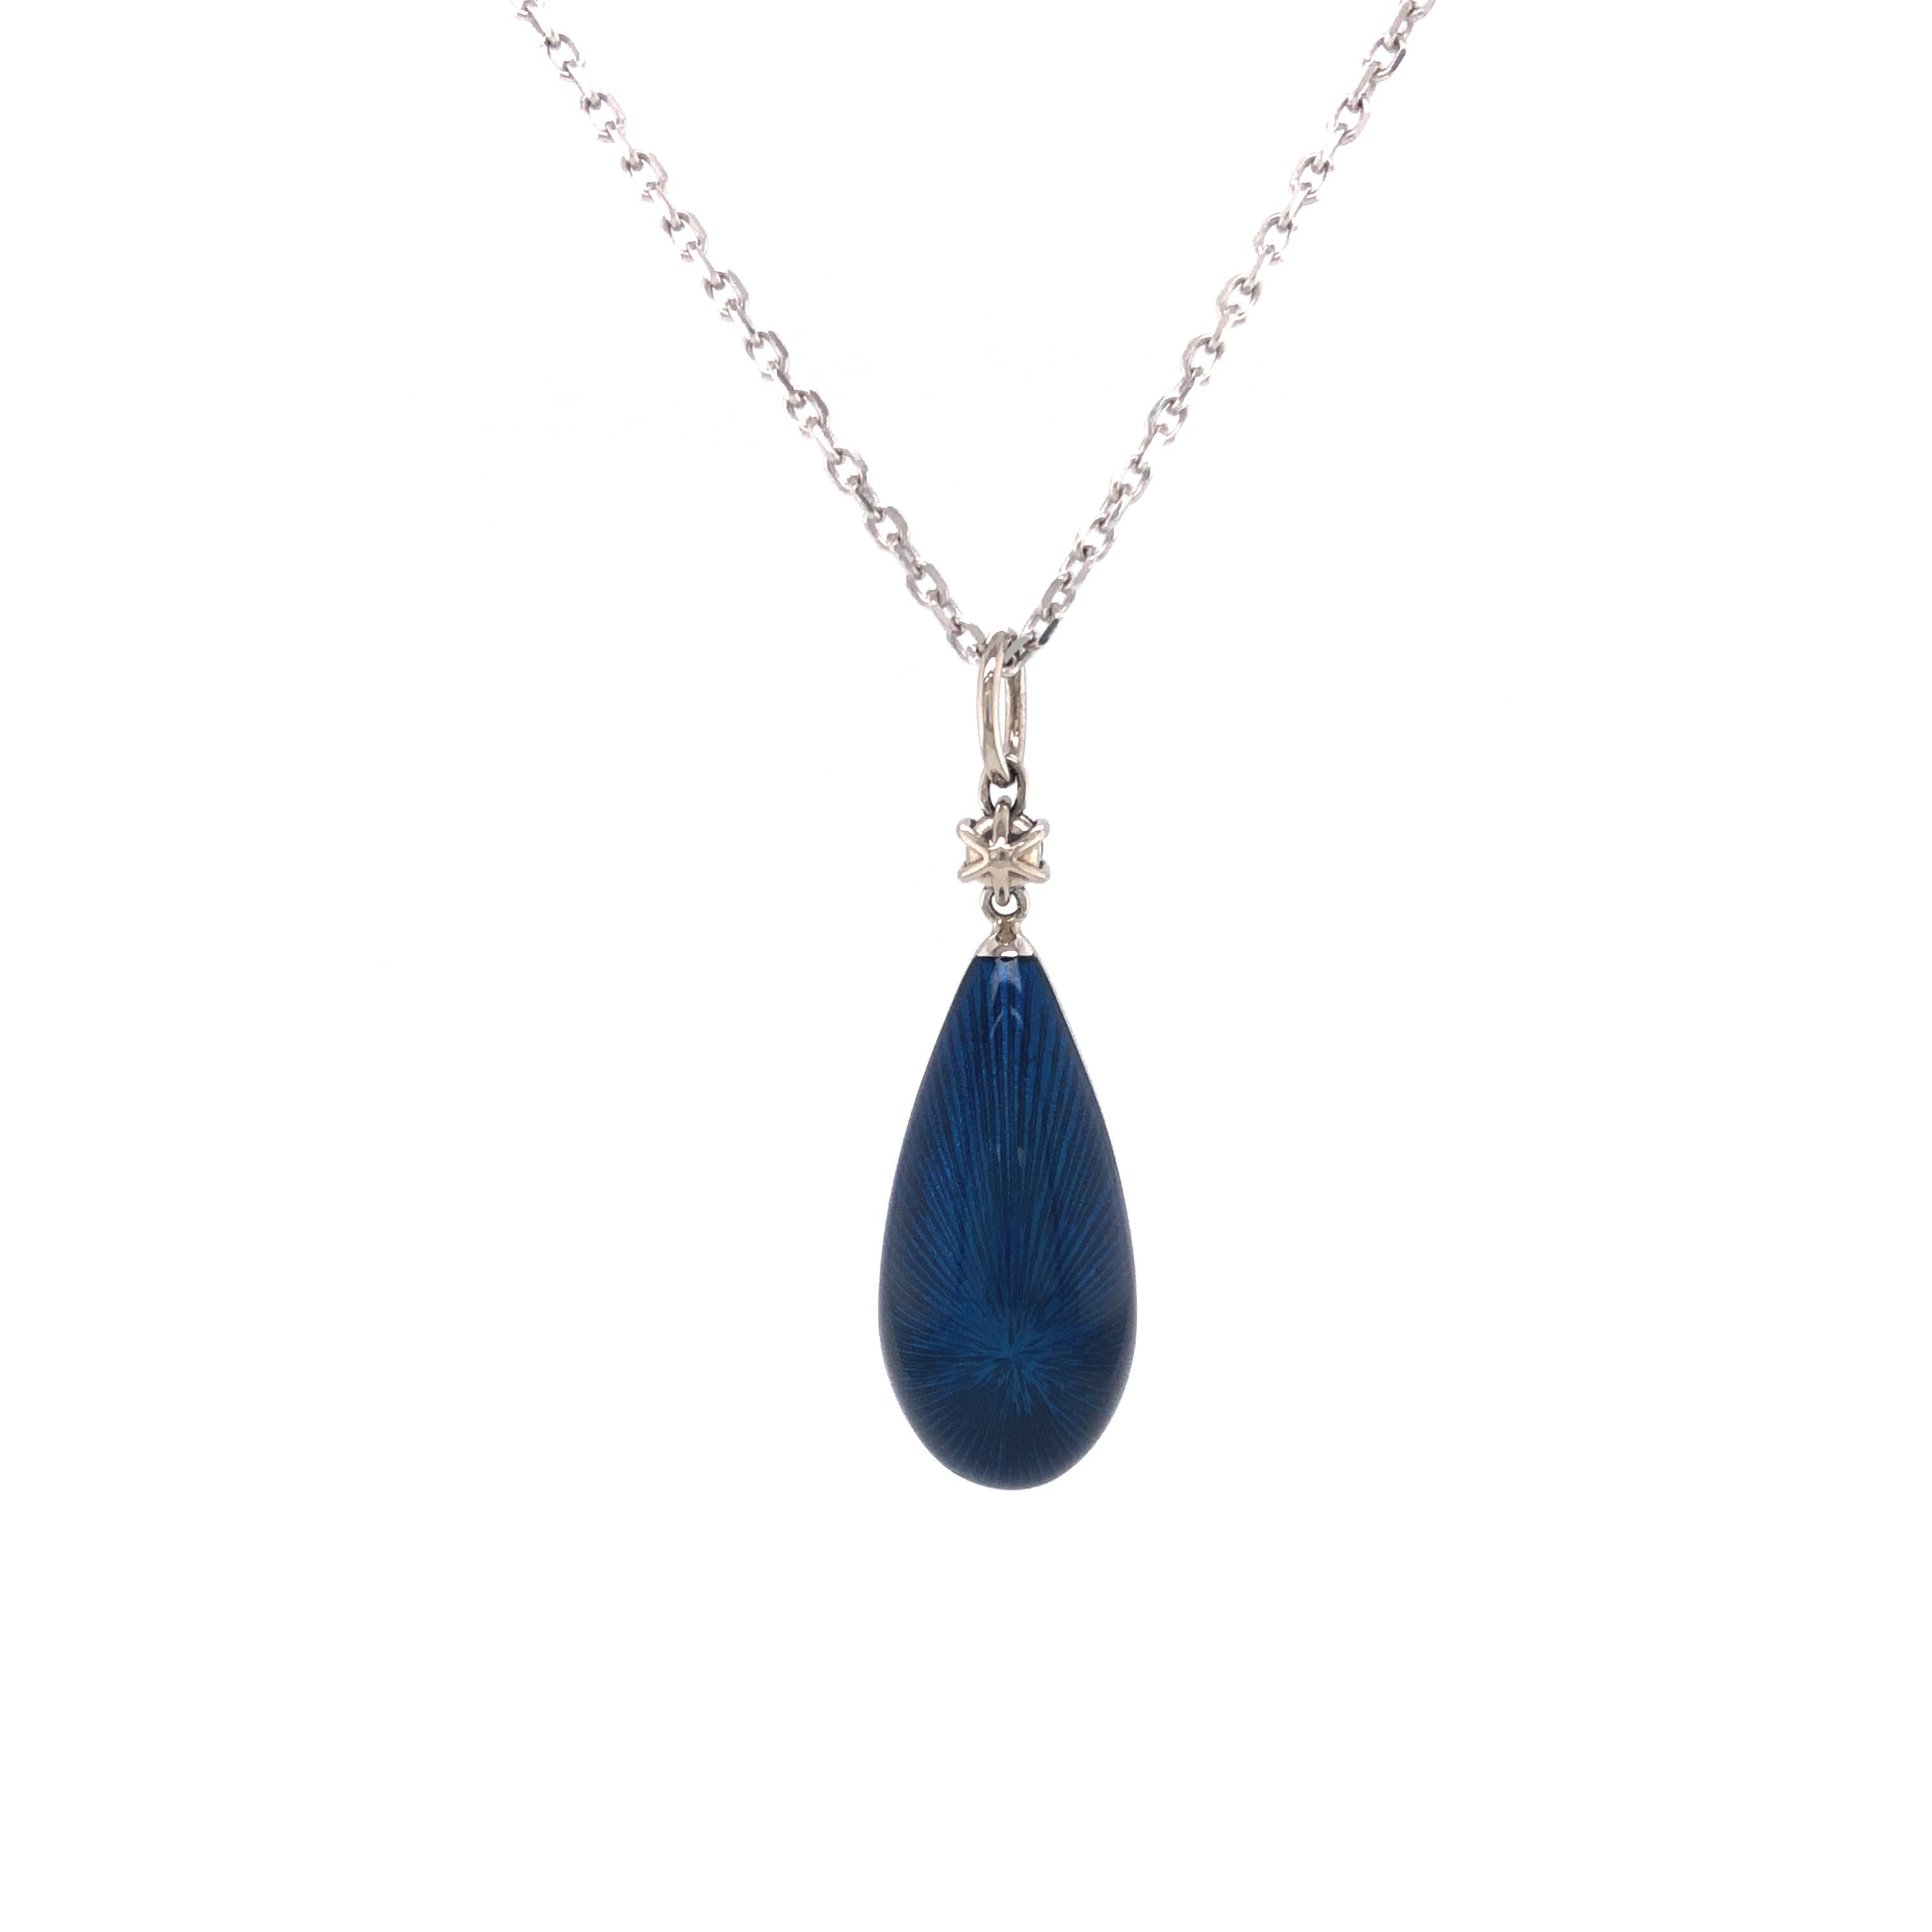 Brilliant Cut Drop Pendant Necklace - 18k White Gold - Blue Guilloche Enamel 1 Diamond 0.09 ct For Sale